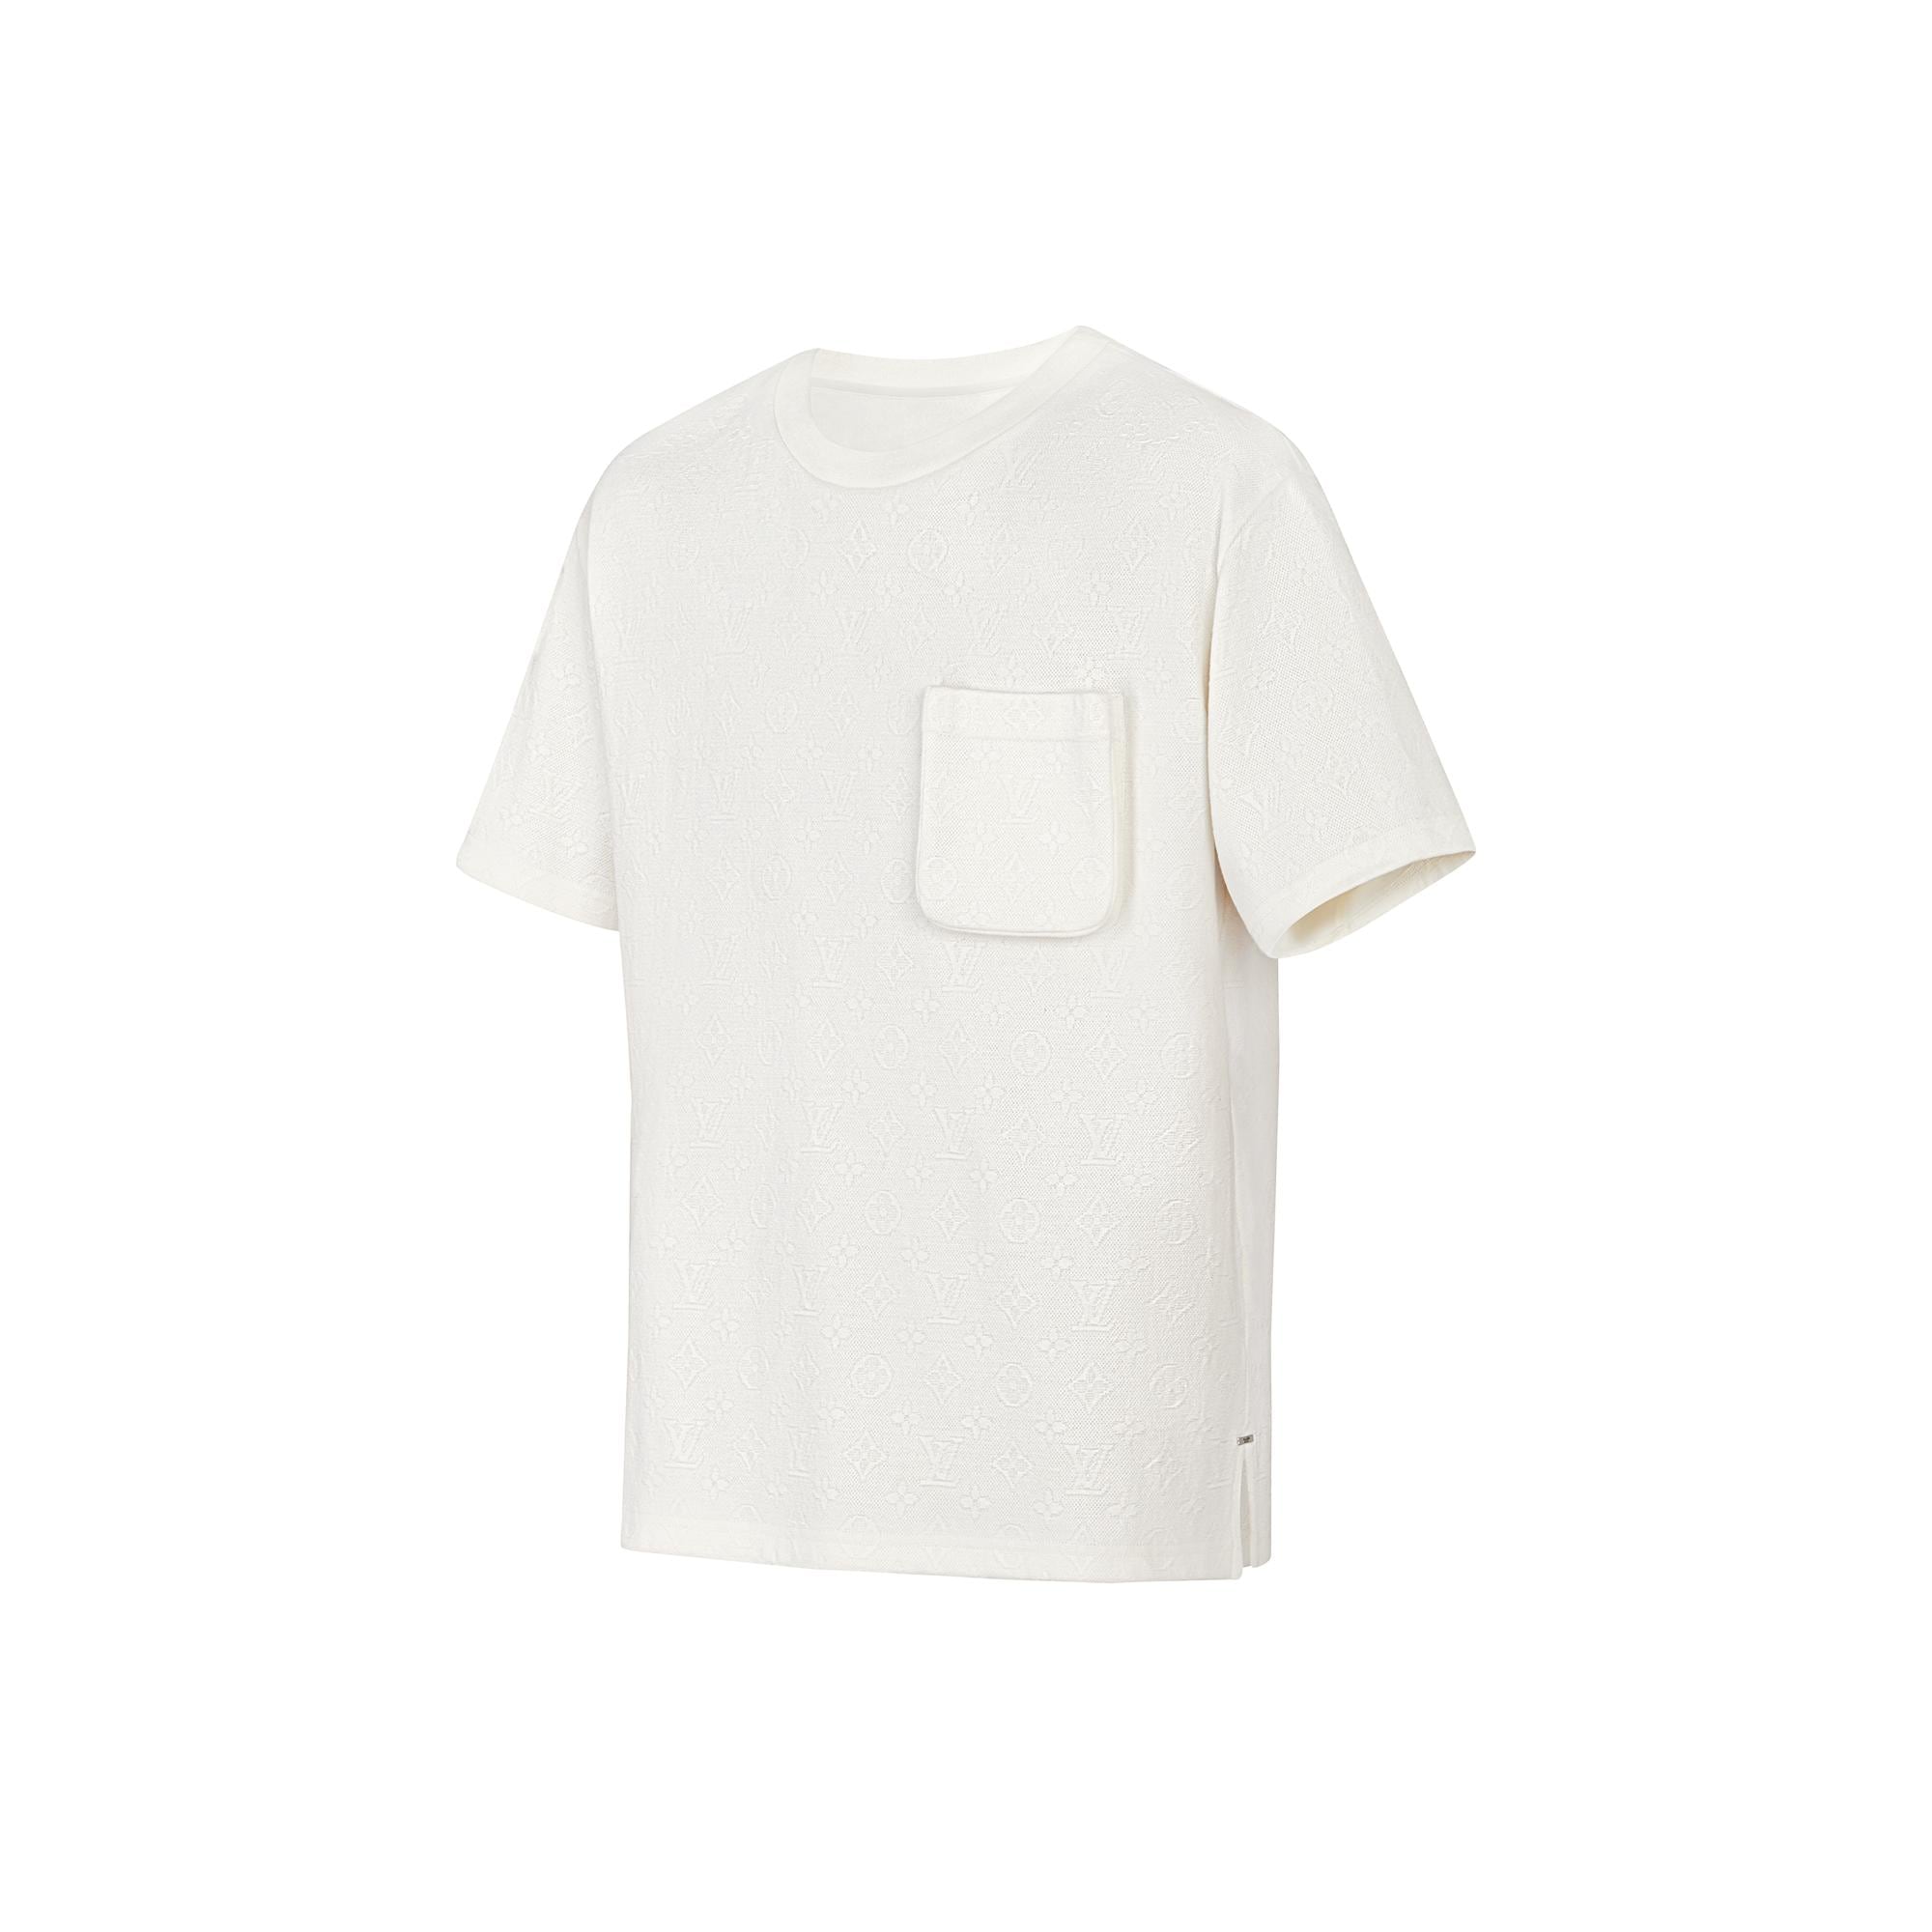 LVSE Signature 3D Pocket Monogram Tshirt - Men - Ready-to-Wear